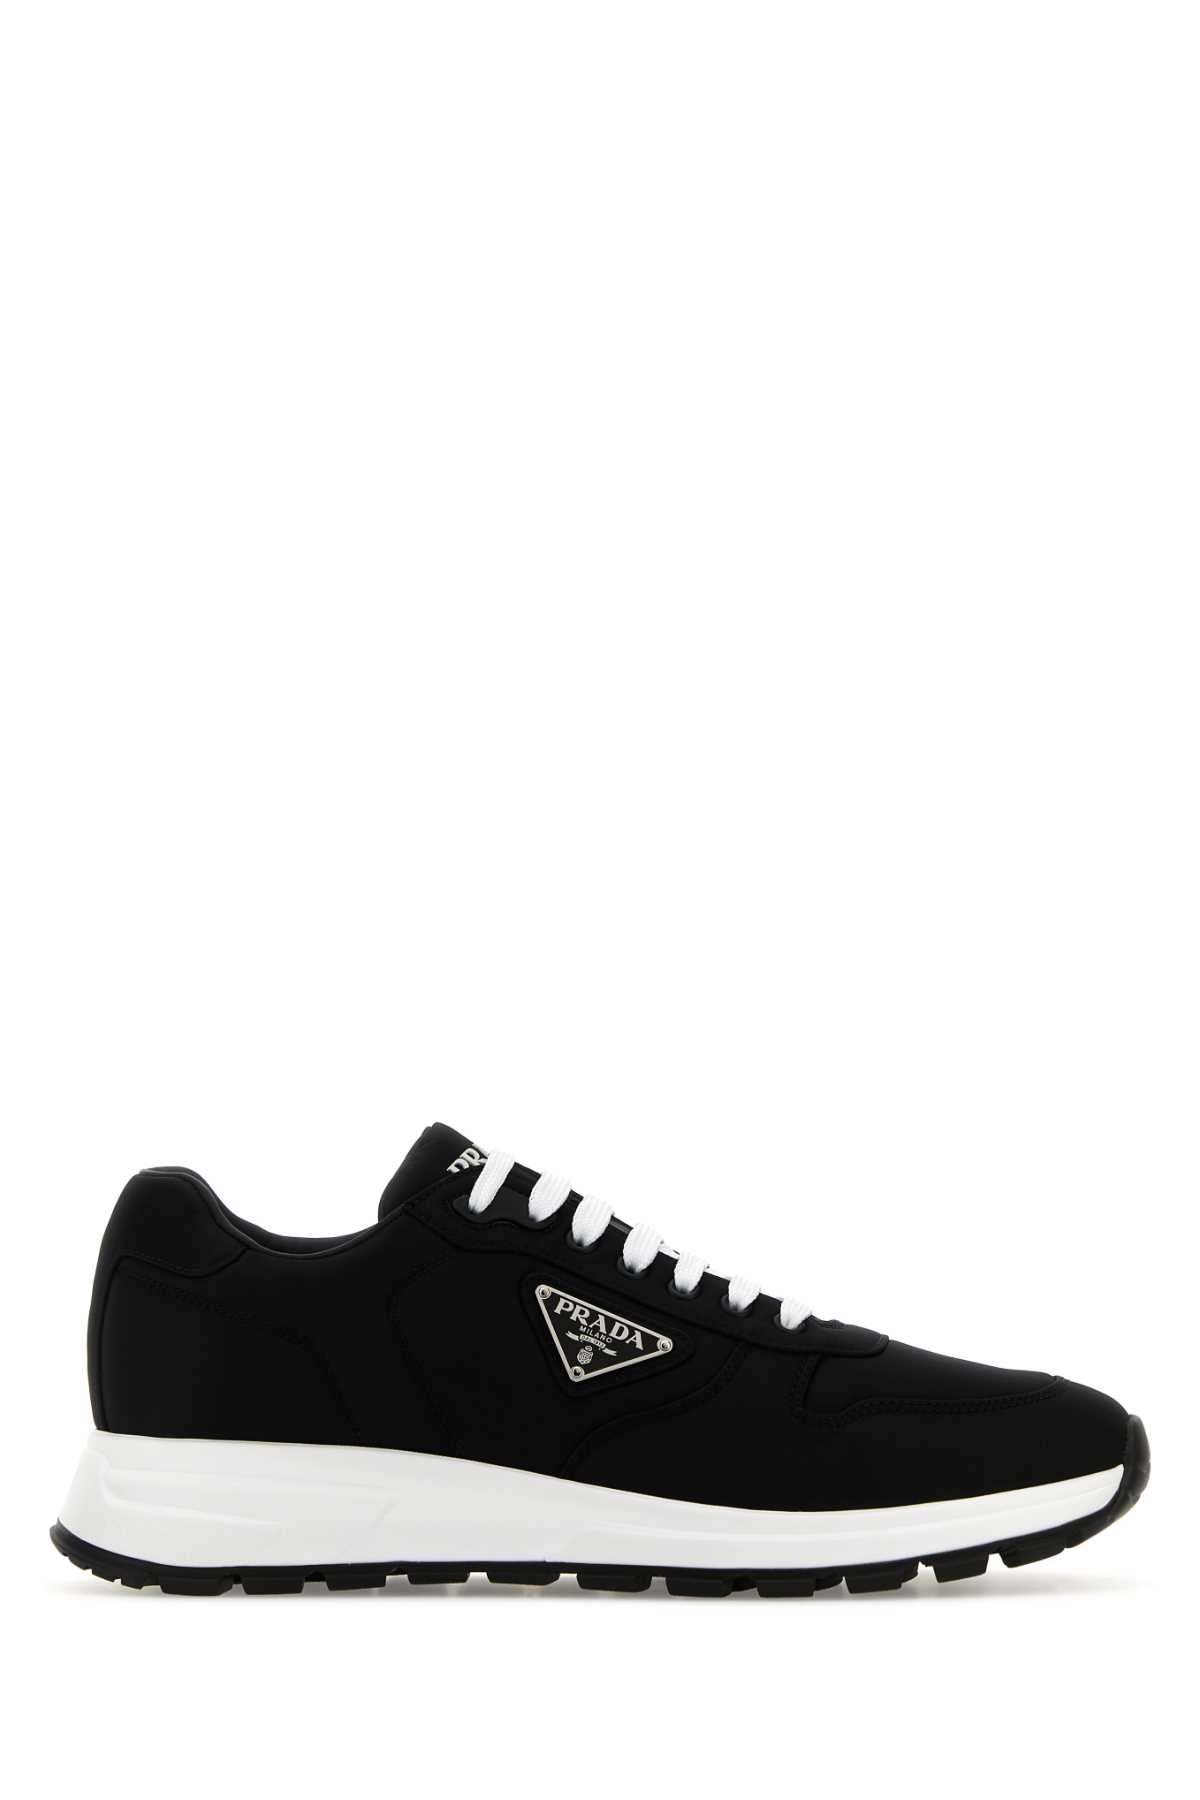 Prada Black Re-nylon Prax 01 Sneakers